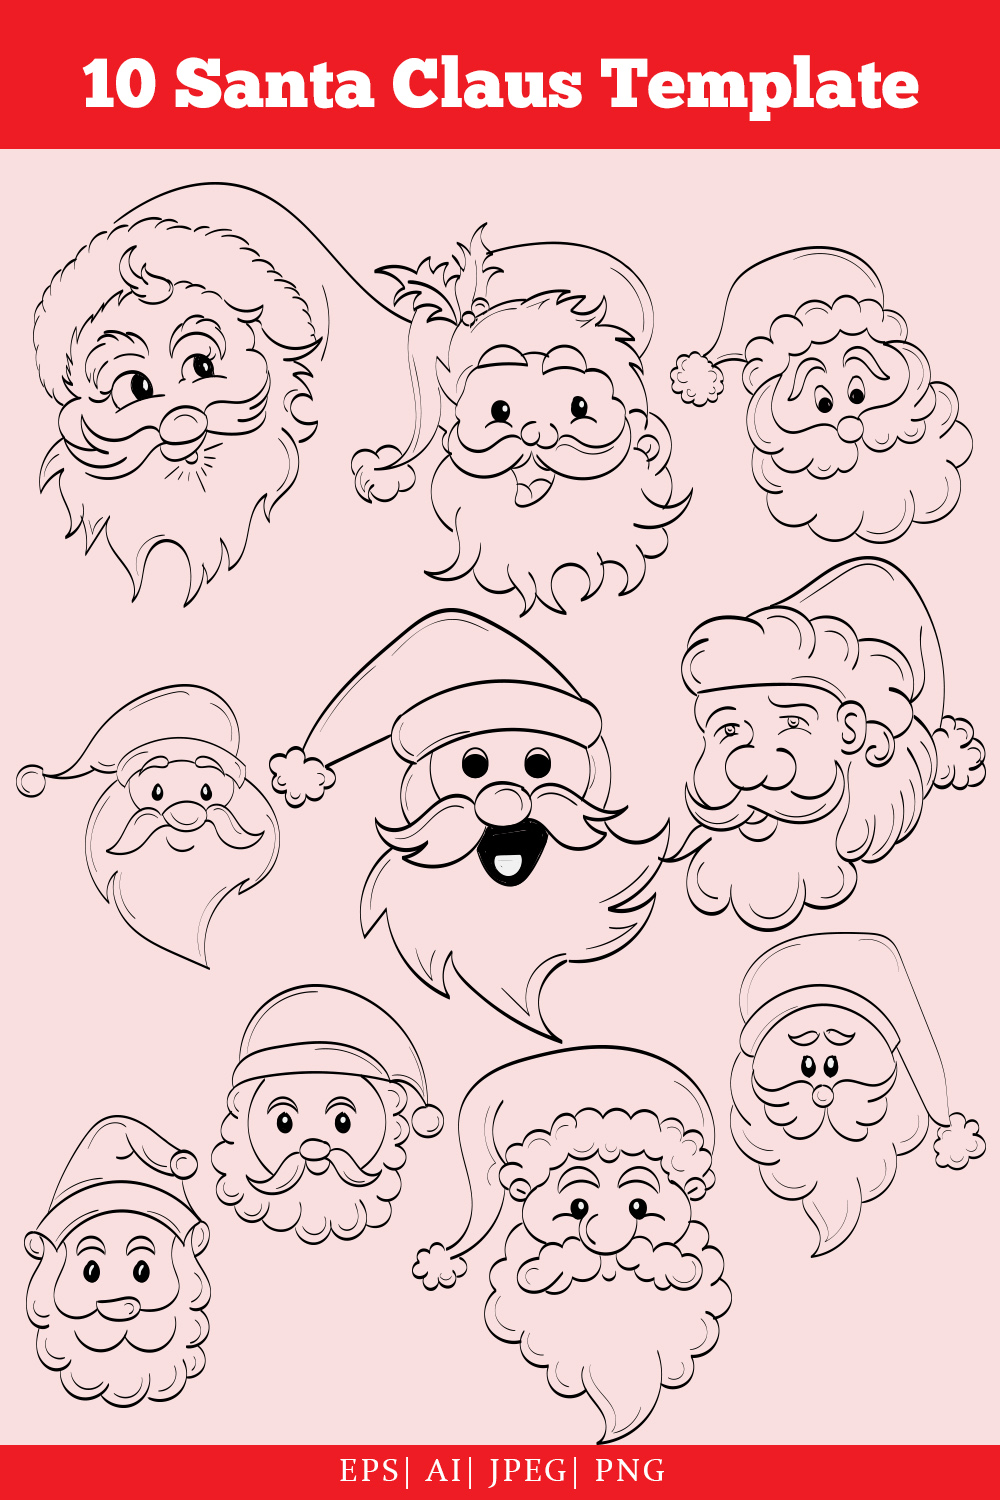 Santa Claus Christmas Design Template pinterest image.